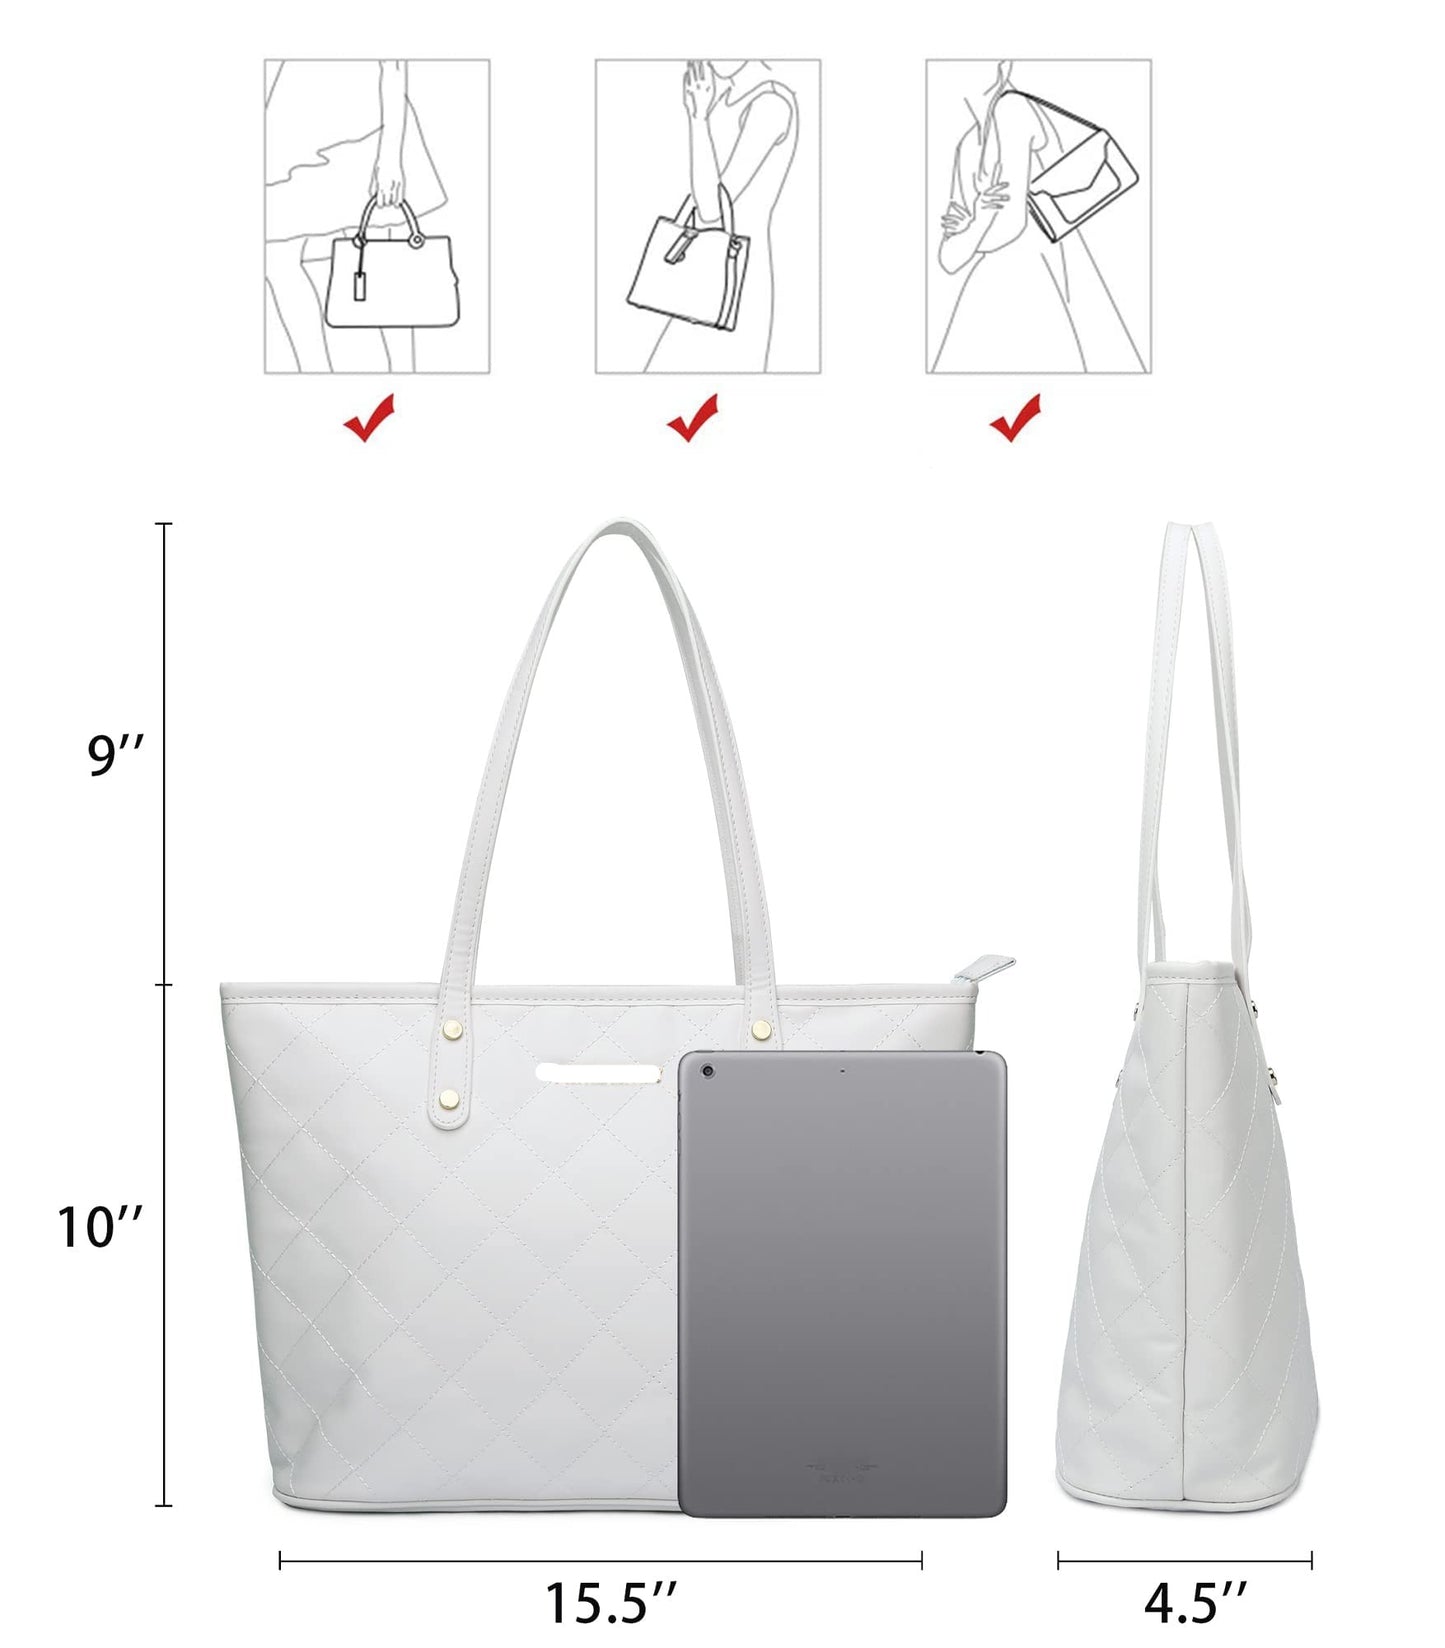 Quilted Handbag for Women Tote Purse Shoulder Bag Large Fashion Hobo Purse